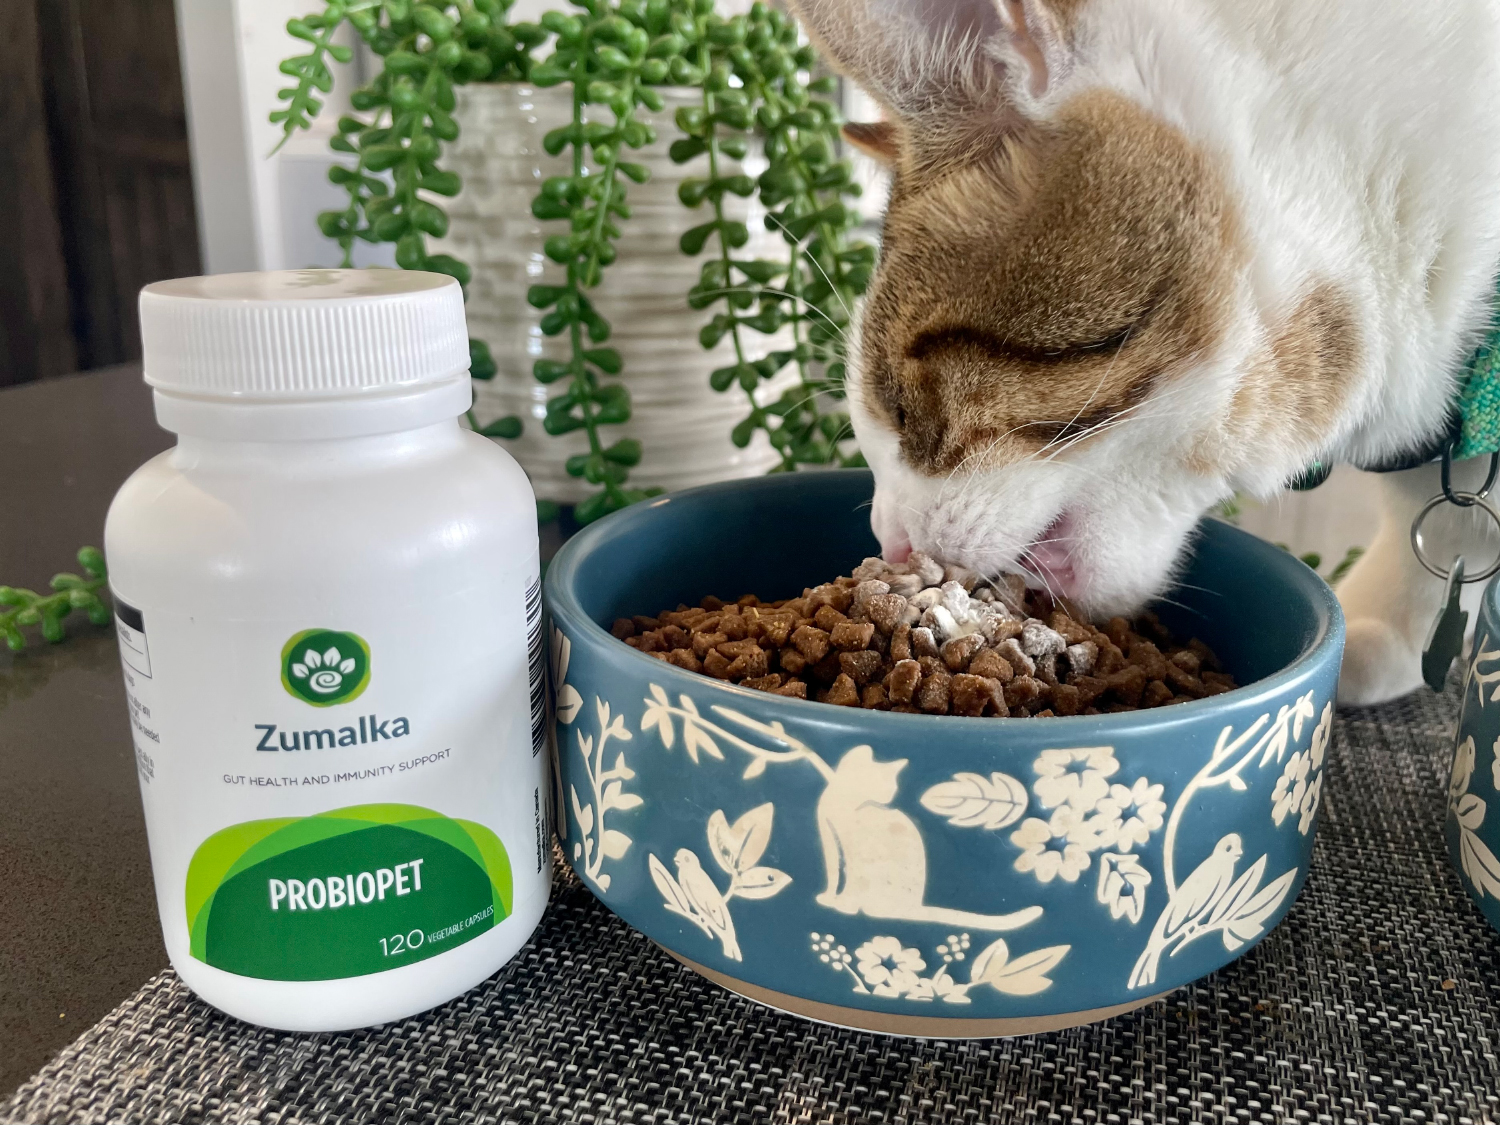 Zumalka Cat Supplement - makoa eating cat food with probiopet